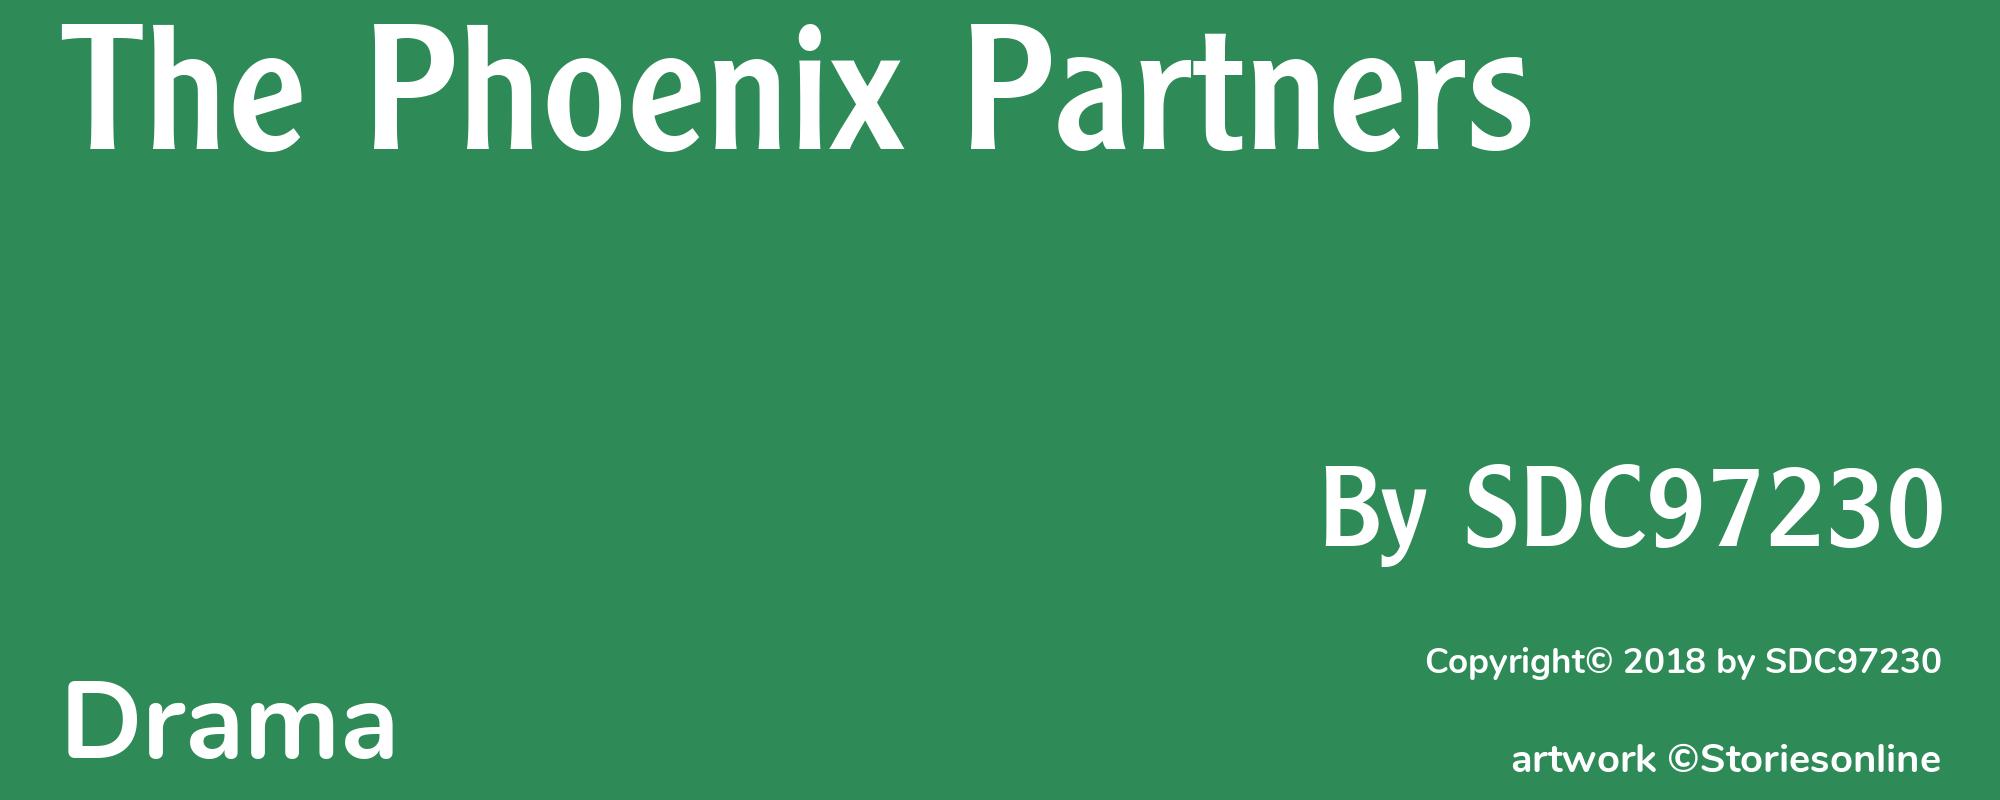 The Phoenix Partners - Cover